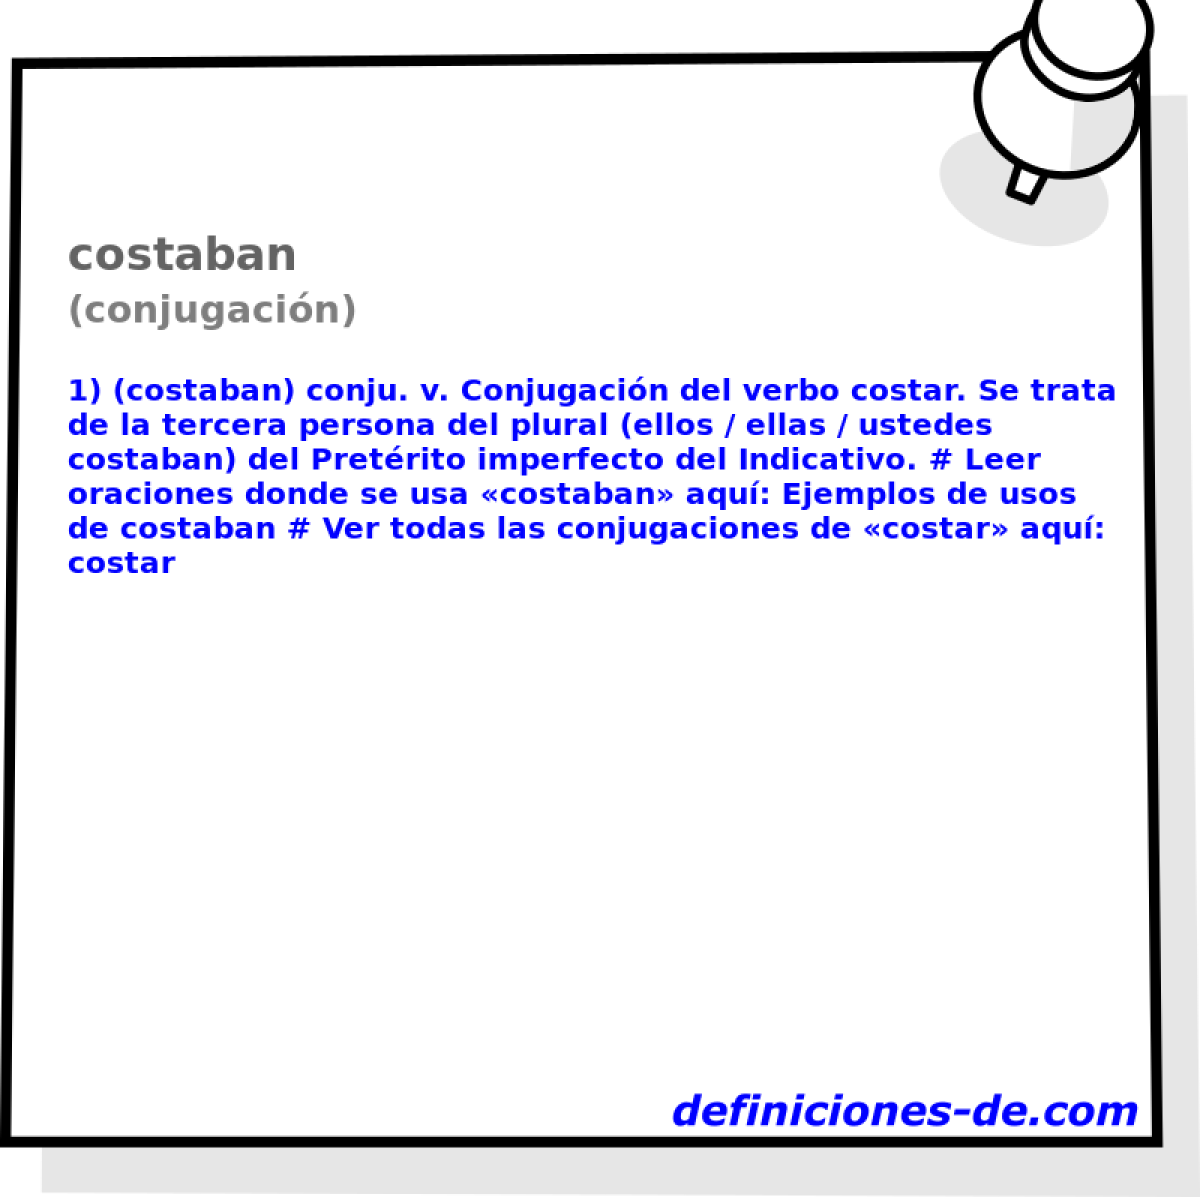 costaban (conjugacin)